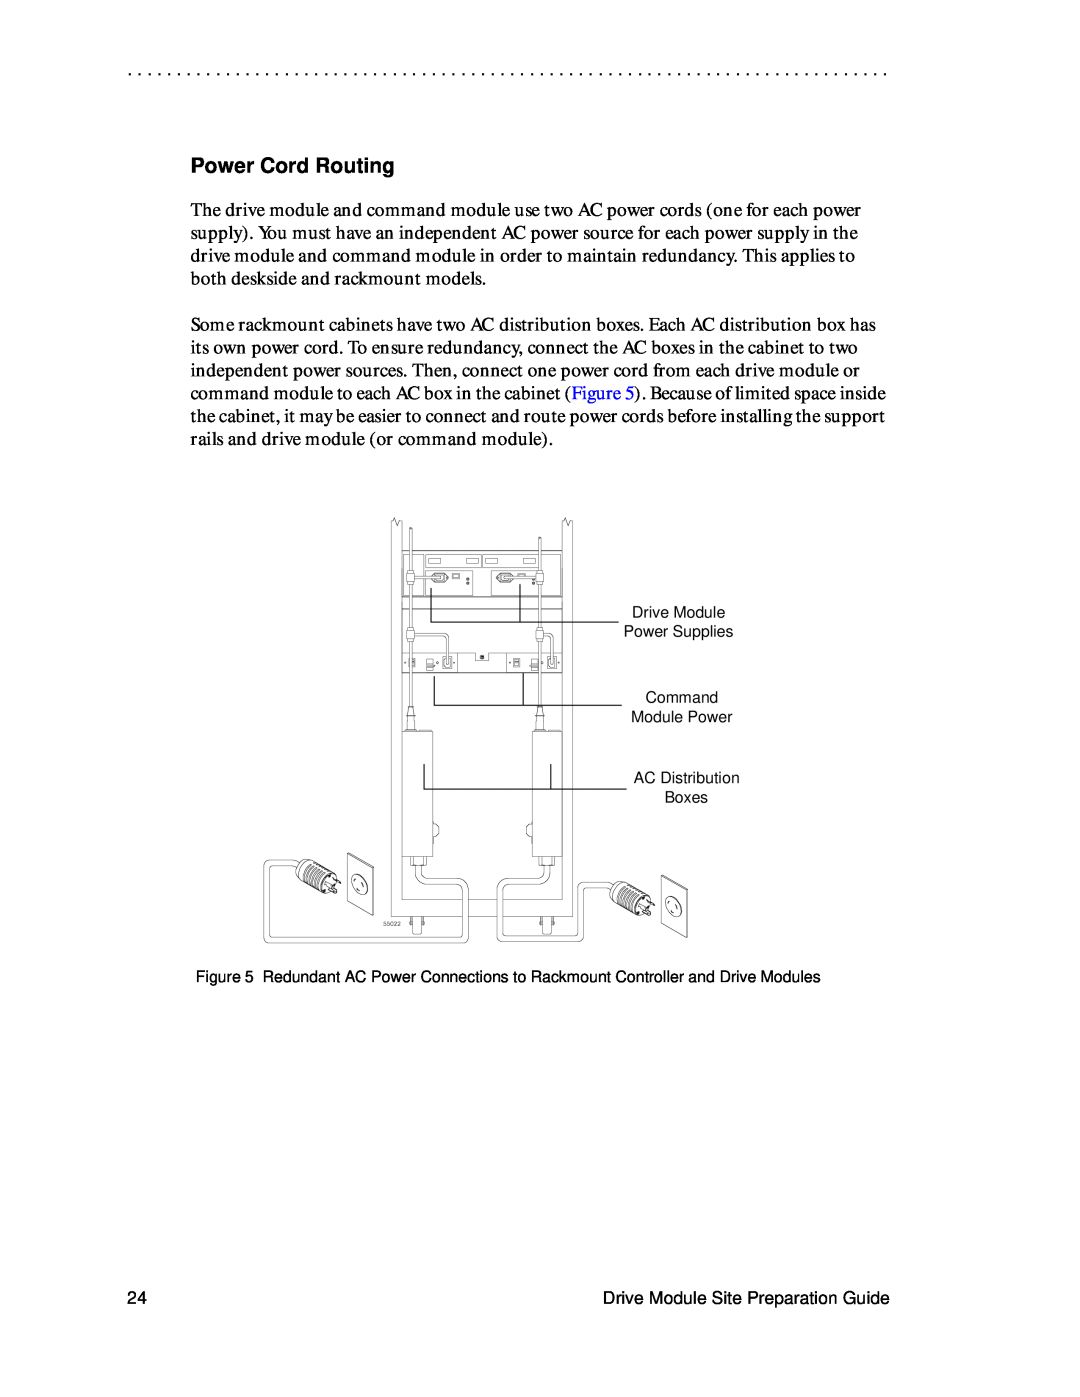 LSI DF1153-E1 Power Cord Routing, Drive Module Site Preparation Guide, Drive Module Power Supplies Command Module Power 